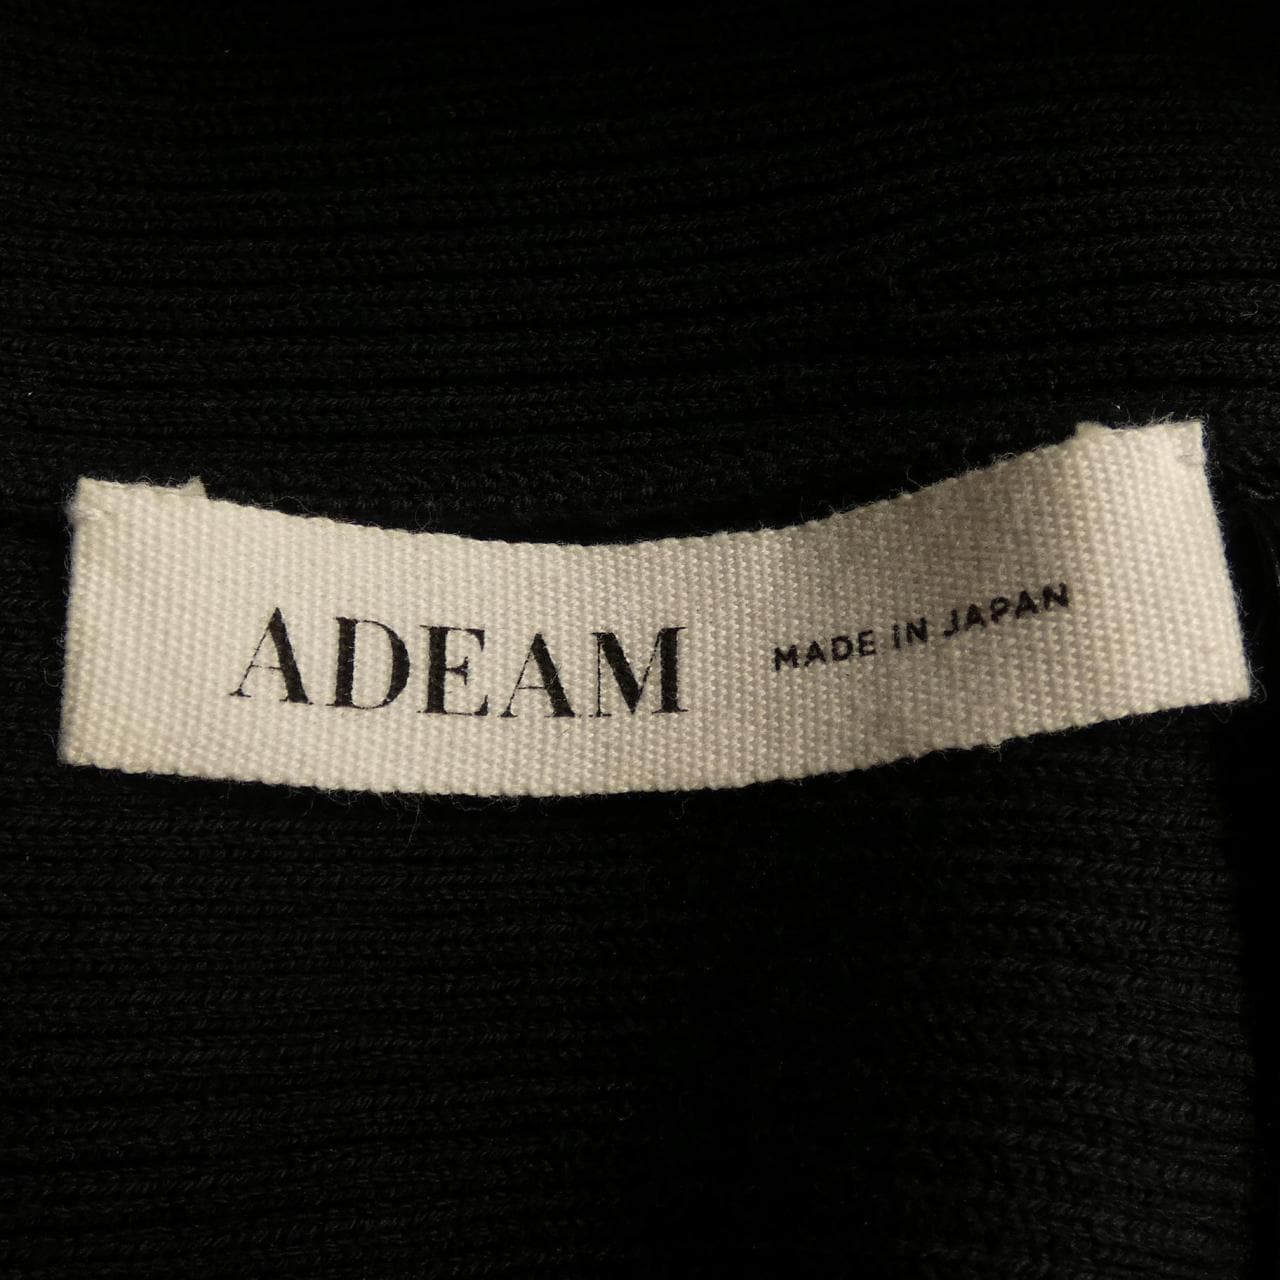 ADEAM knit